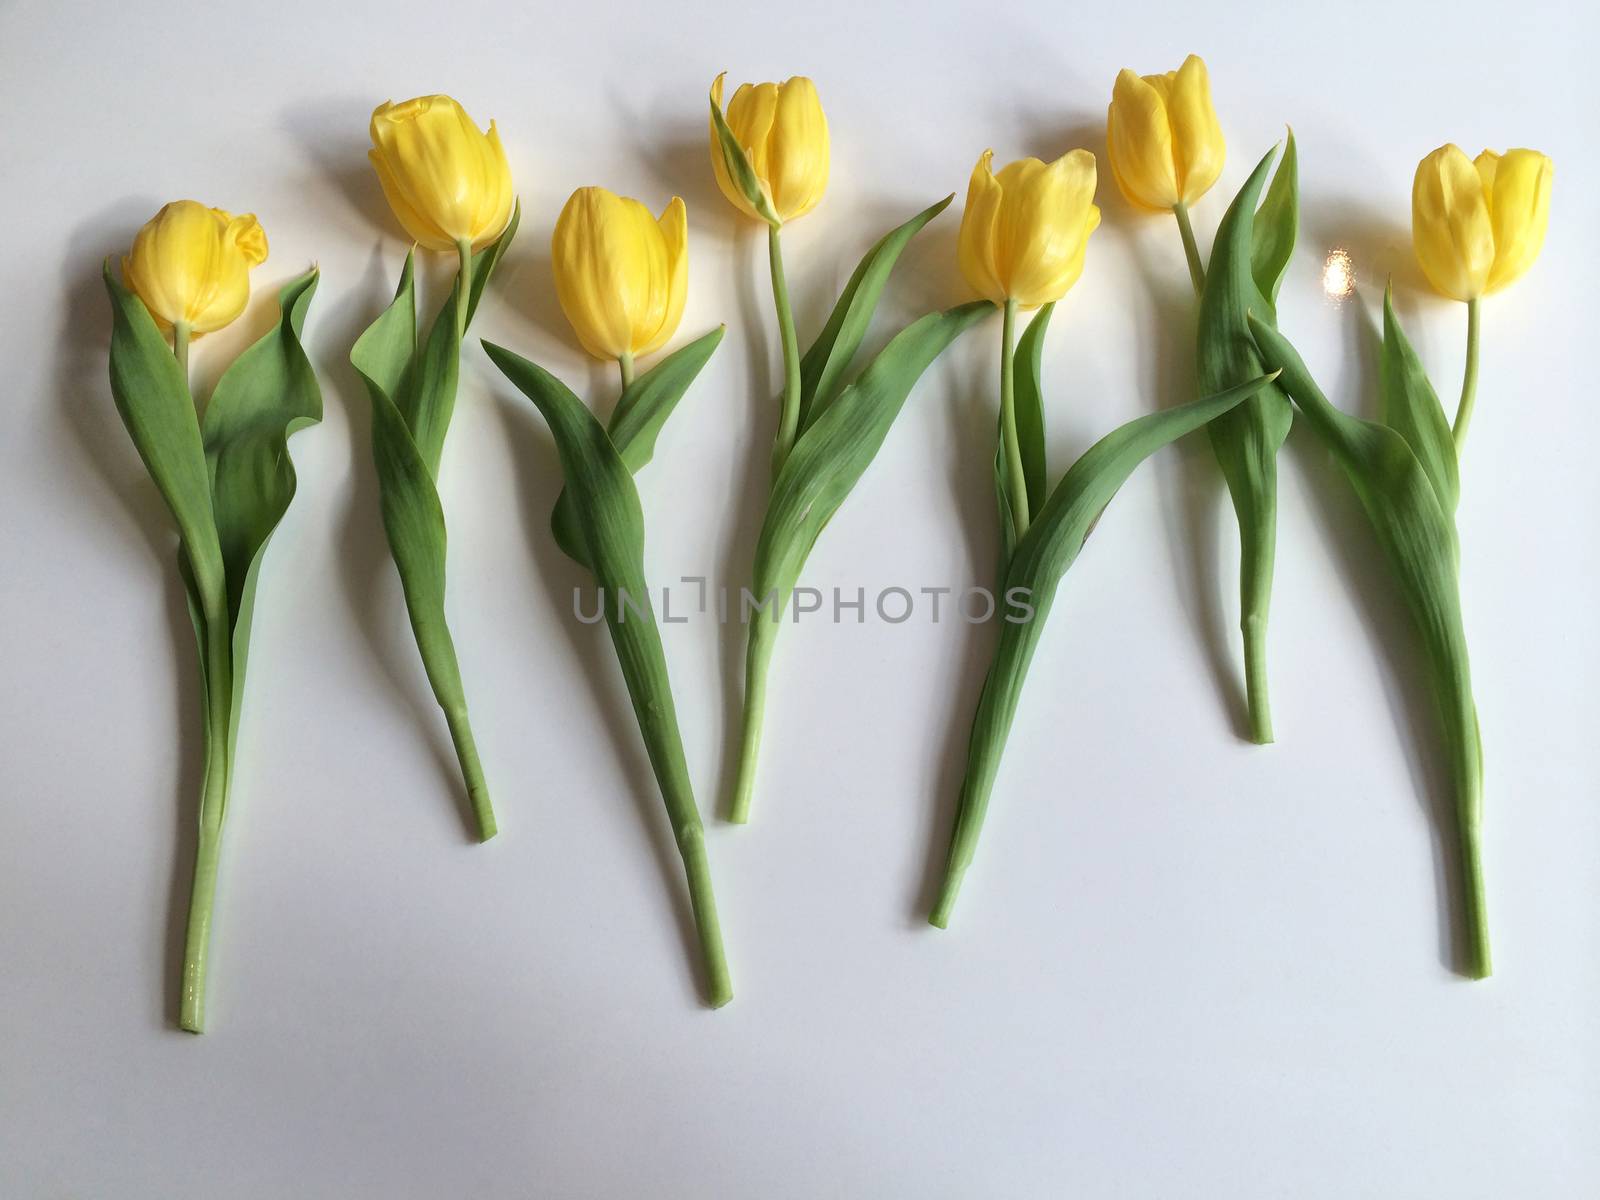 Row of yellow tulips on white